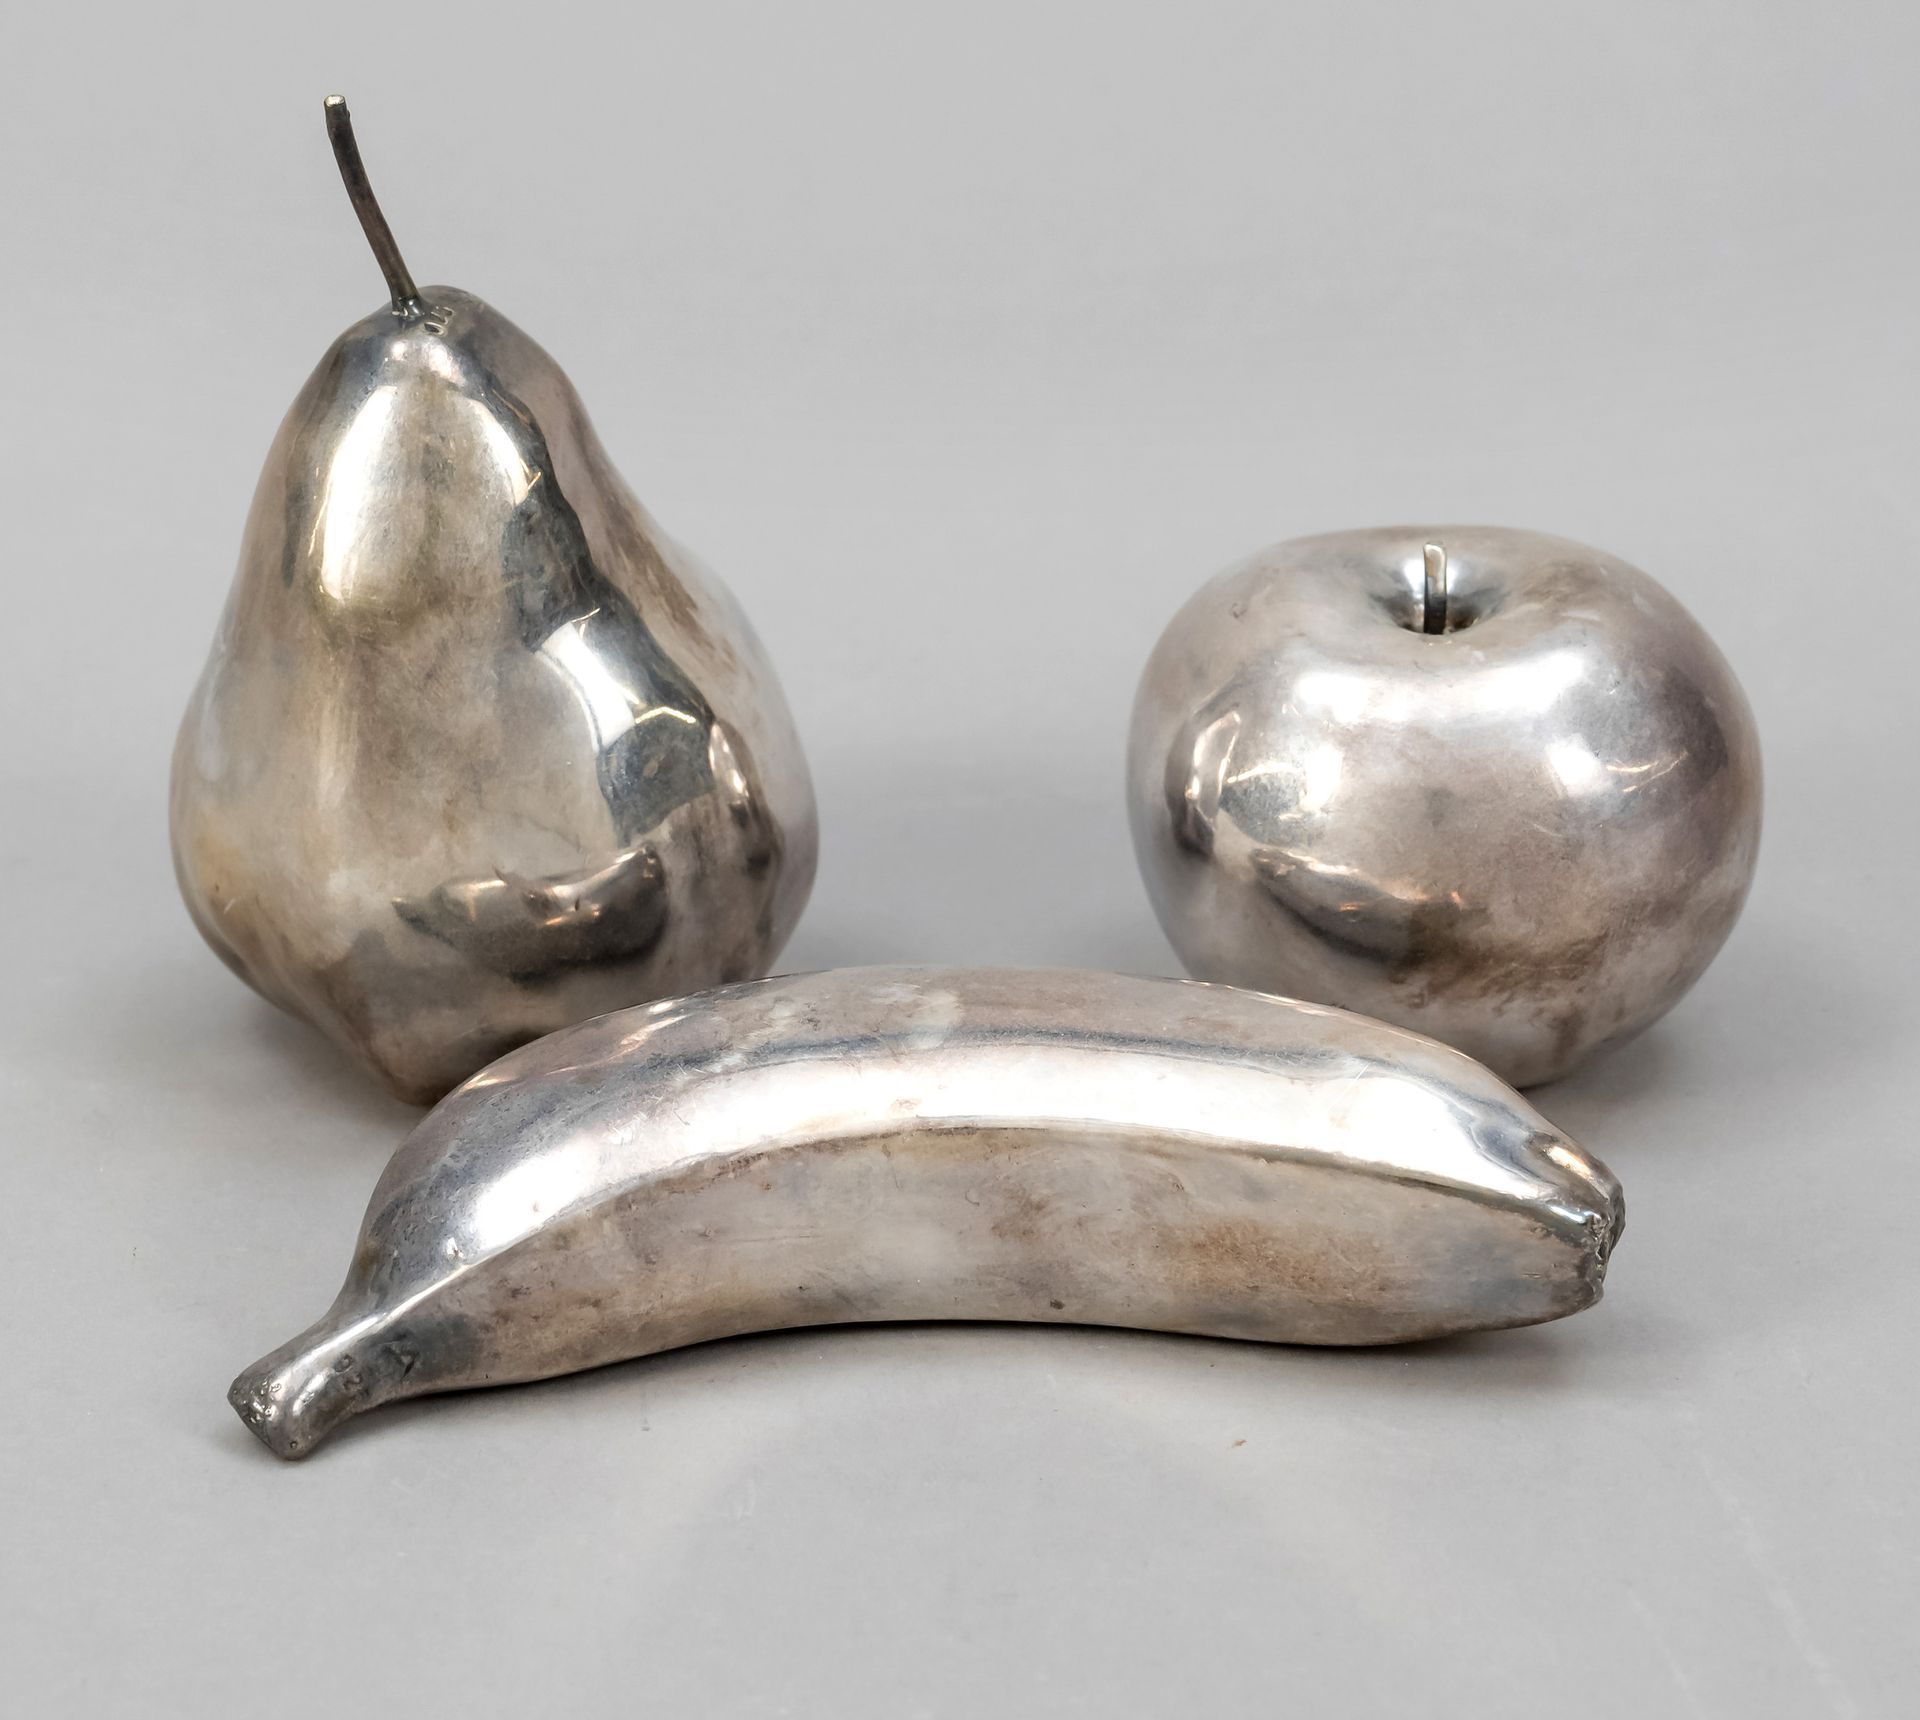 Null 三件套桌饰，20世纪，纯银925/000，梨、苹果和香蕉，填充，长至14.5厘米